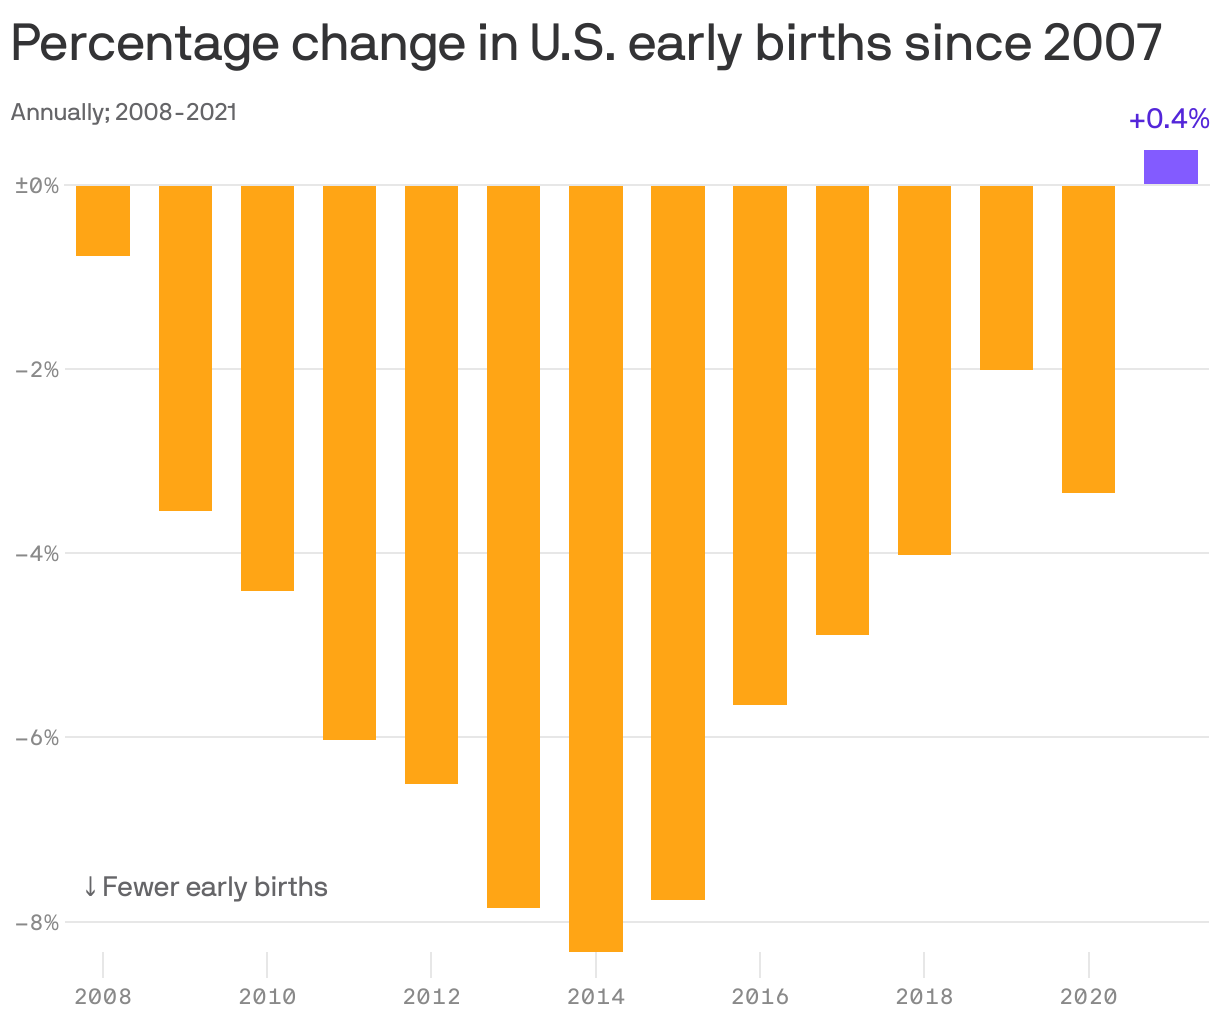 Percentage change in U.S. early births since 2007